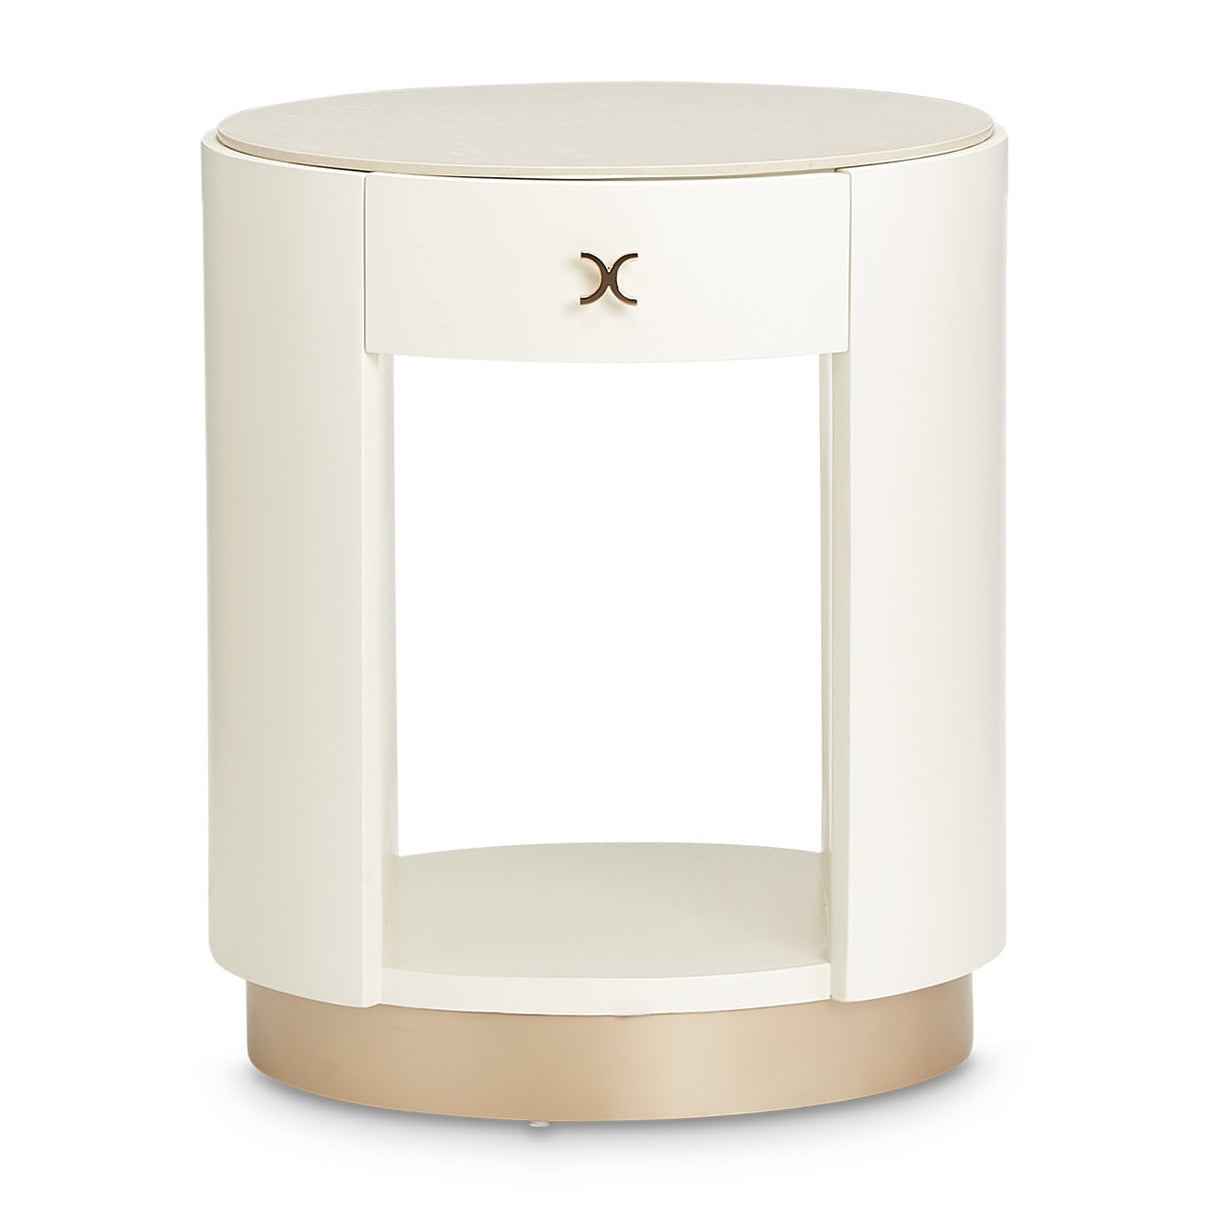 Aico Furniture - La Rachelle Round End Table W/ Marble Top In Medium Champagne - 9034224-136